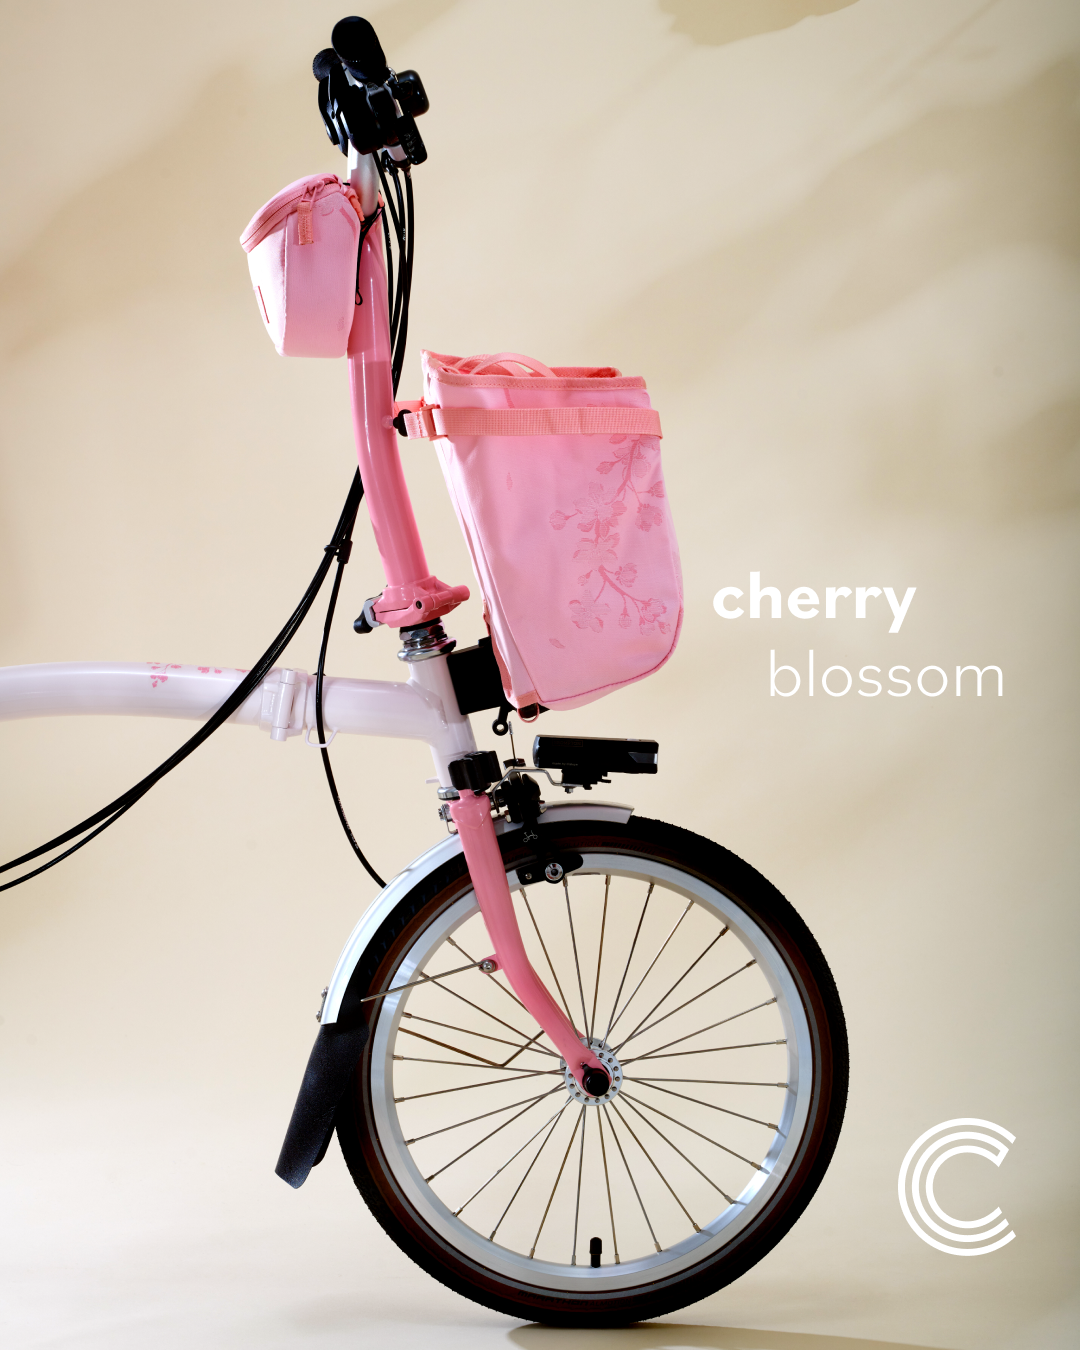 【BROMPTON】限定モデル「Cherry Blossom」 | 池袋で自転車をお探しならY's Road 池袋本館